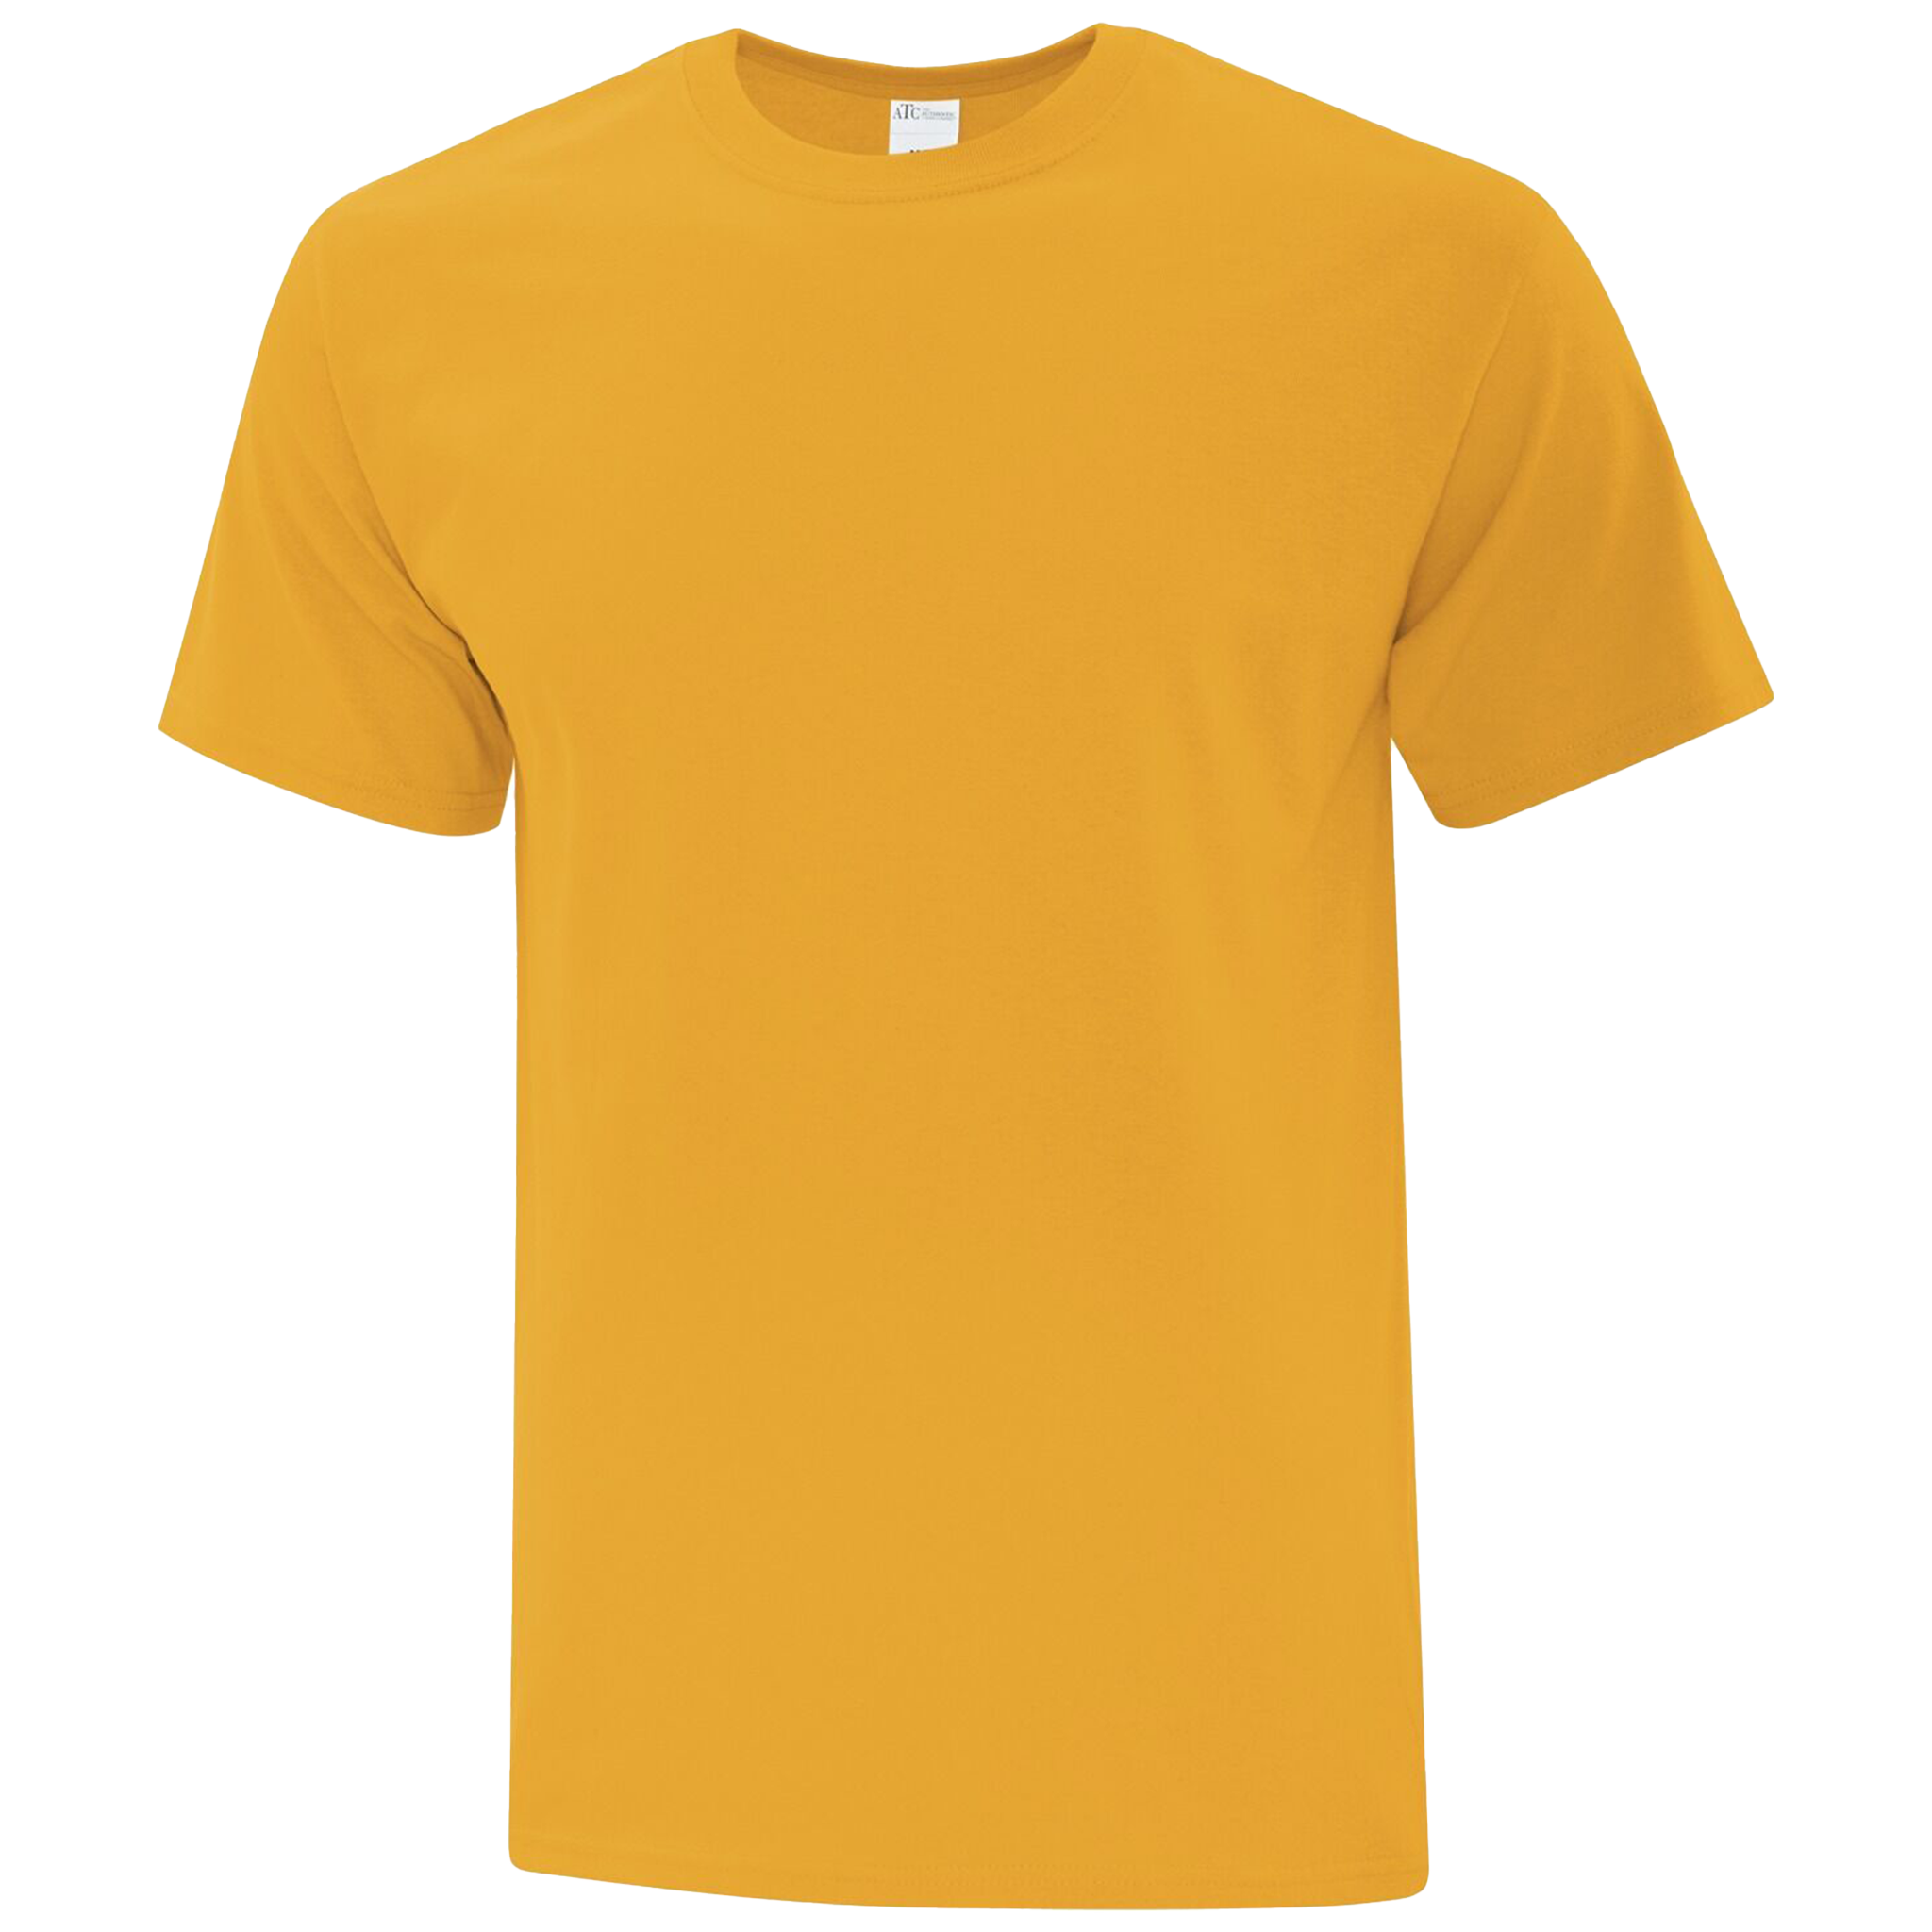 ATC Everyday Cotton T-Shirt - Men's Sizing S-4XL - Gold